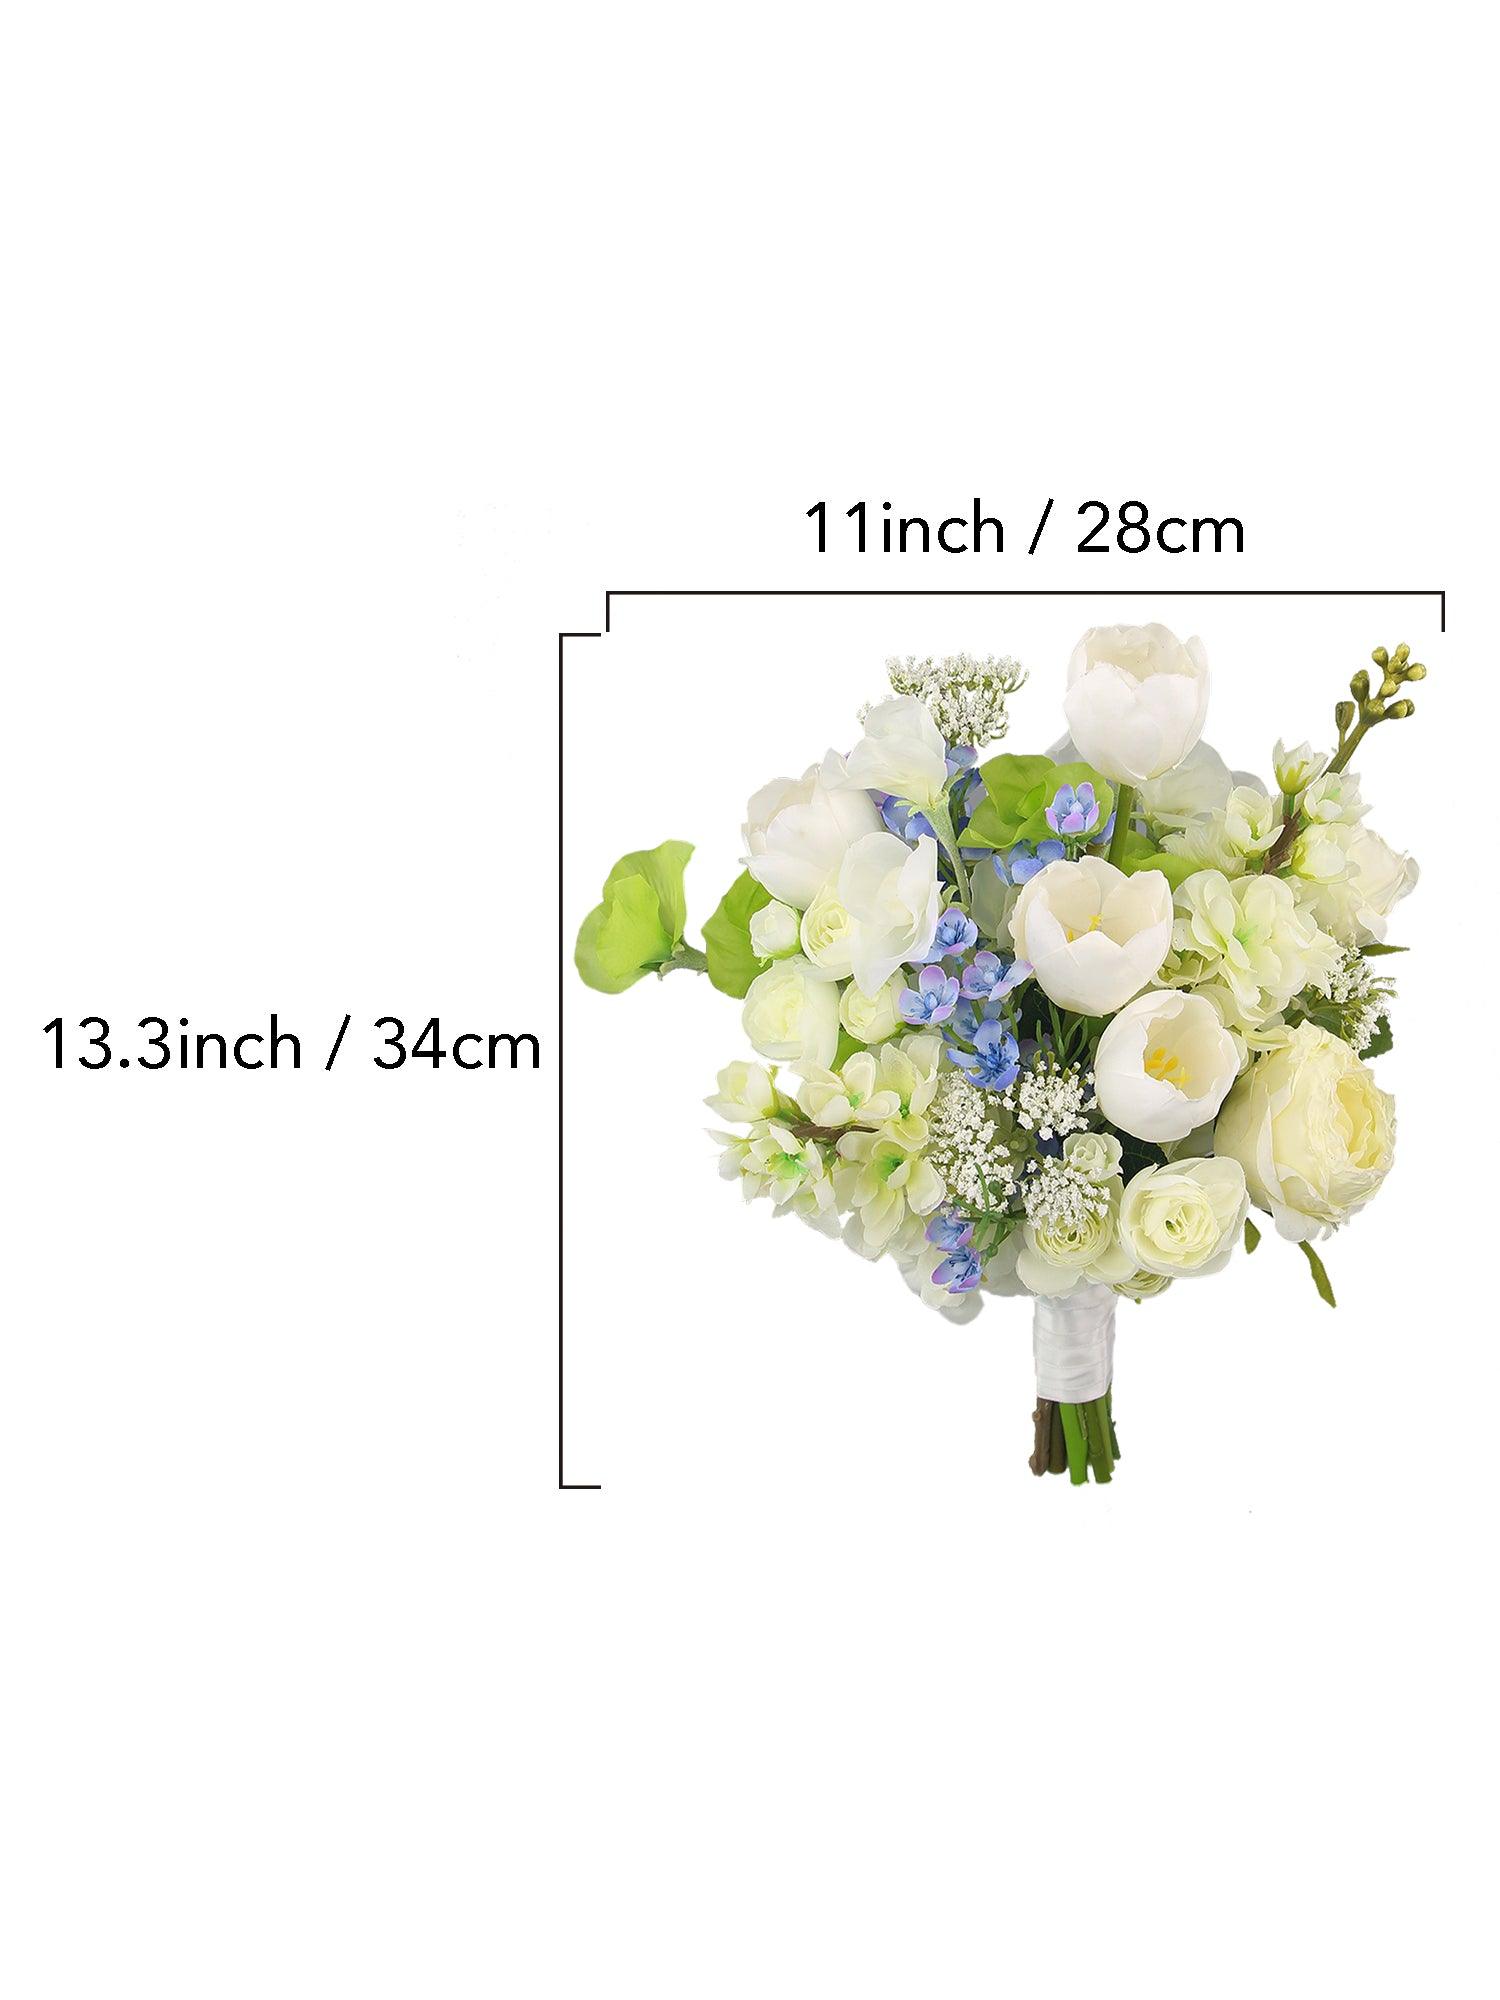 11 inch wide White & Blue Bridal Bouquet